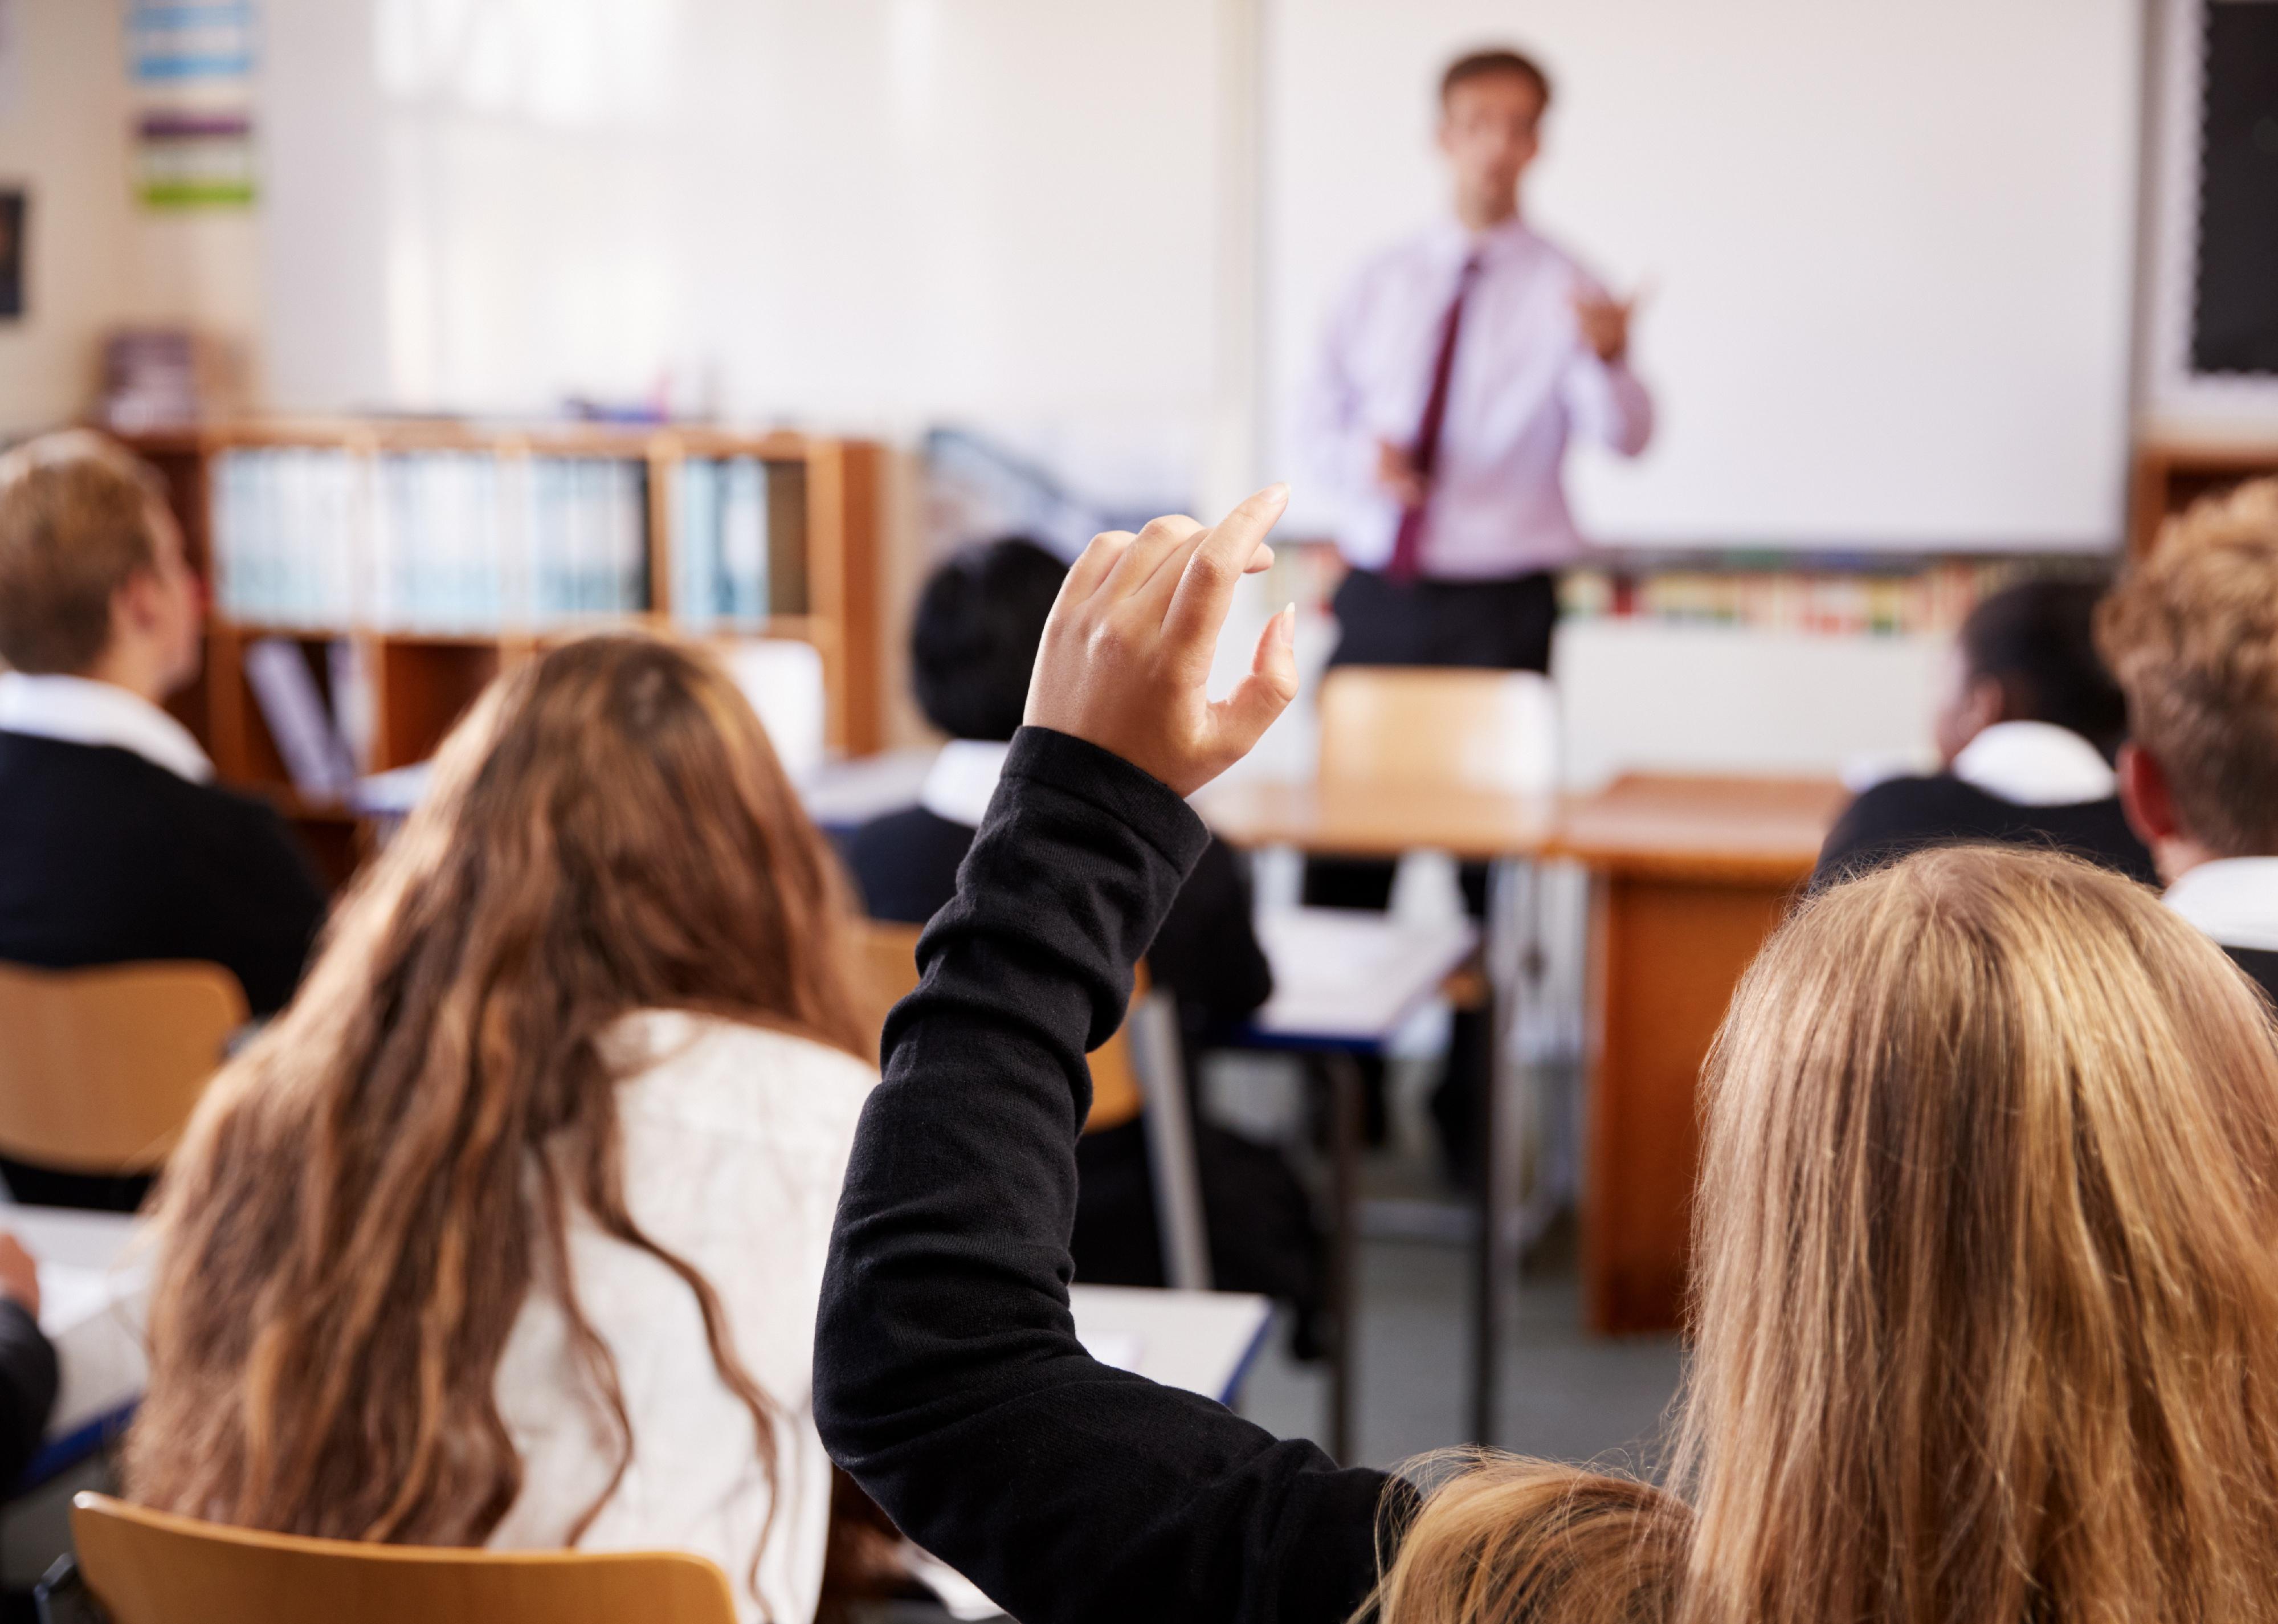 Female student raising hand in private school classroom.